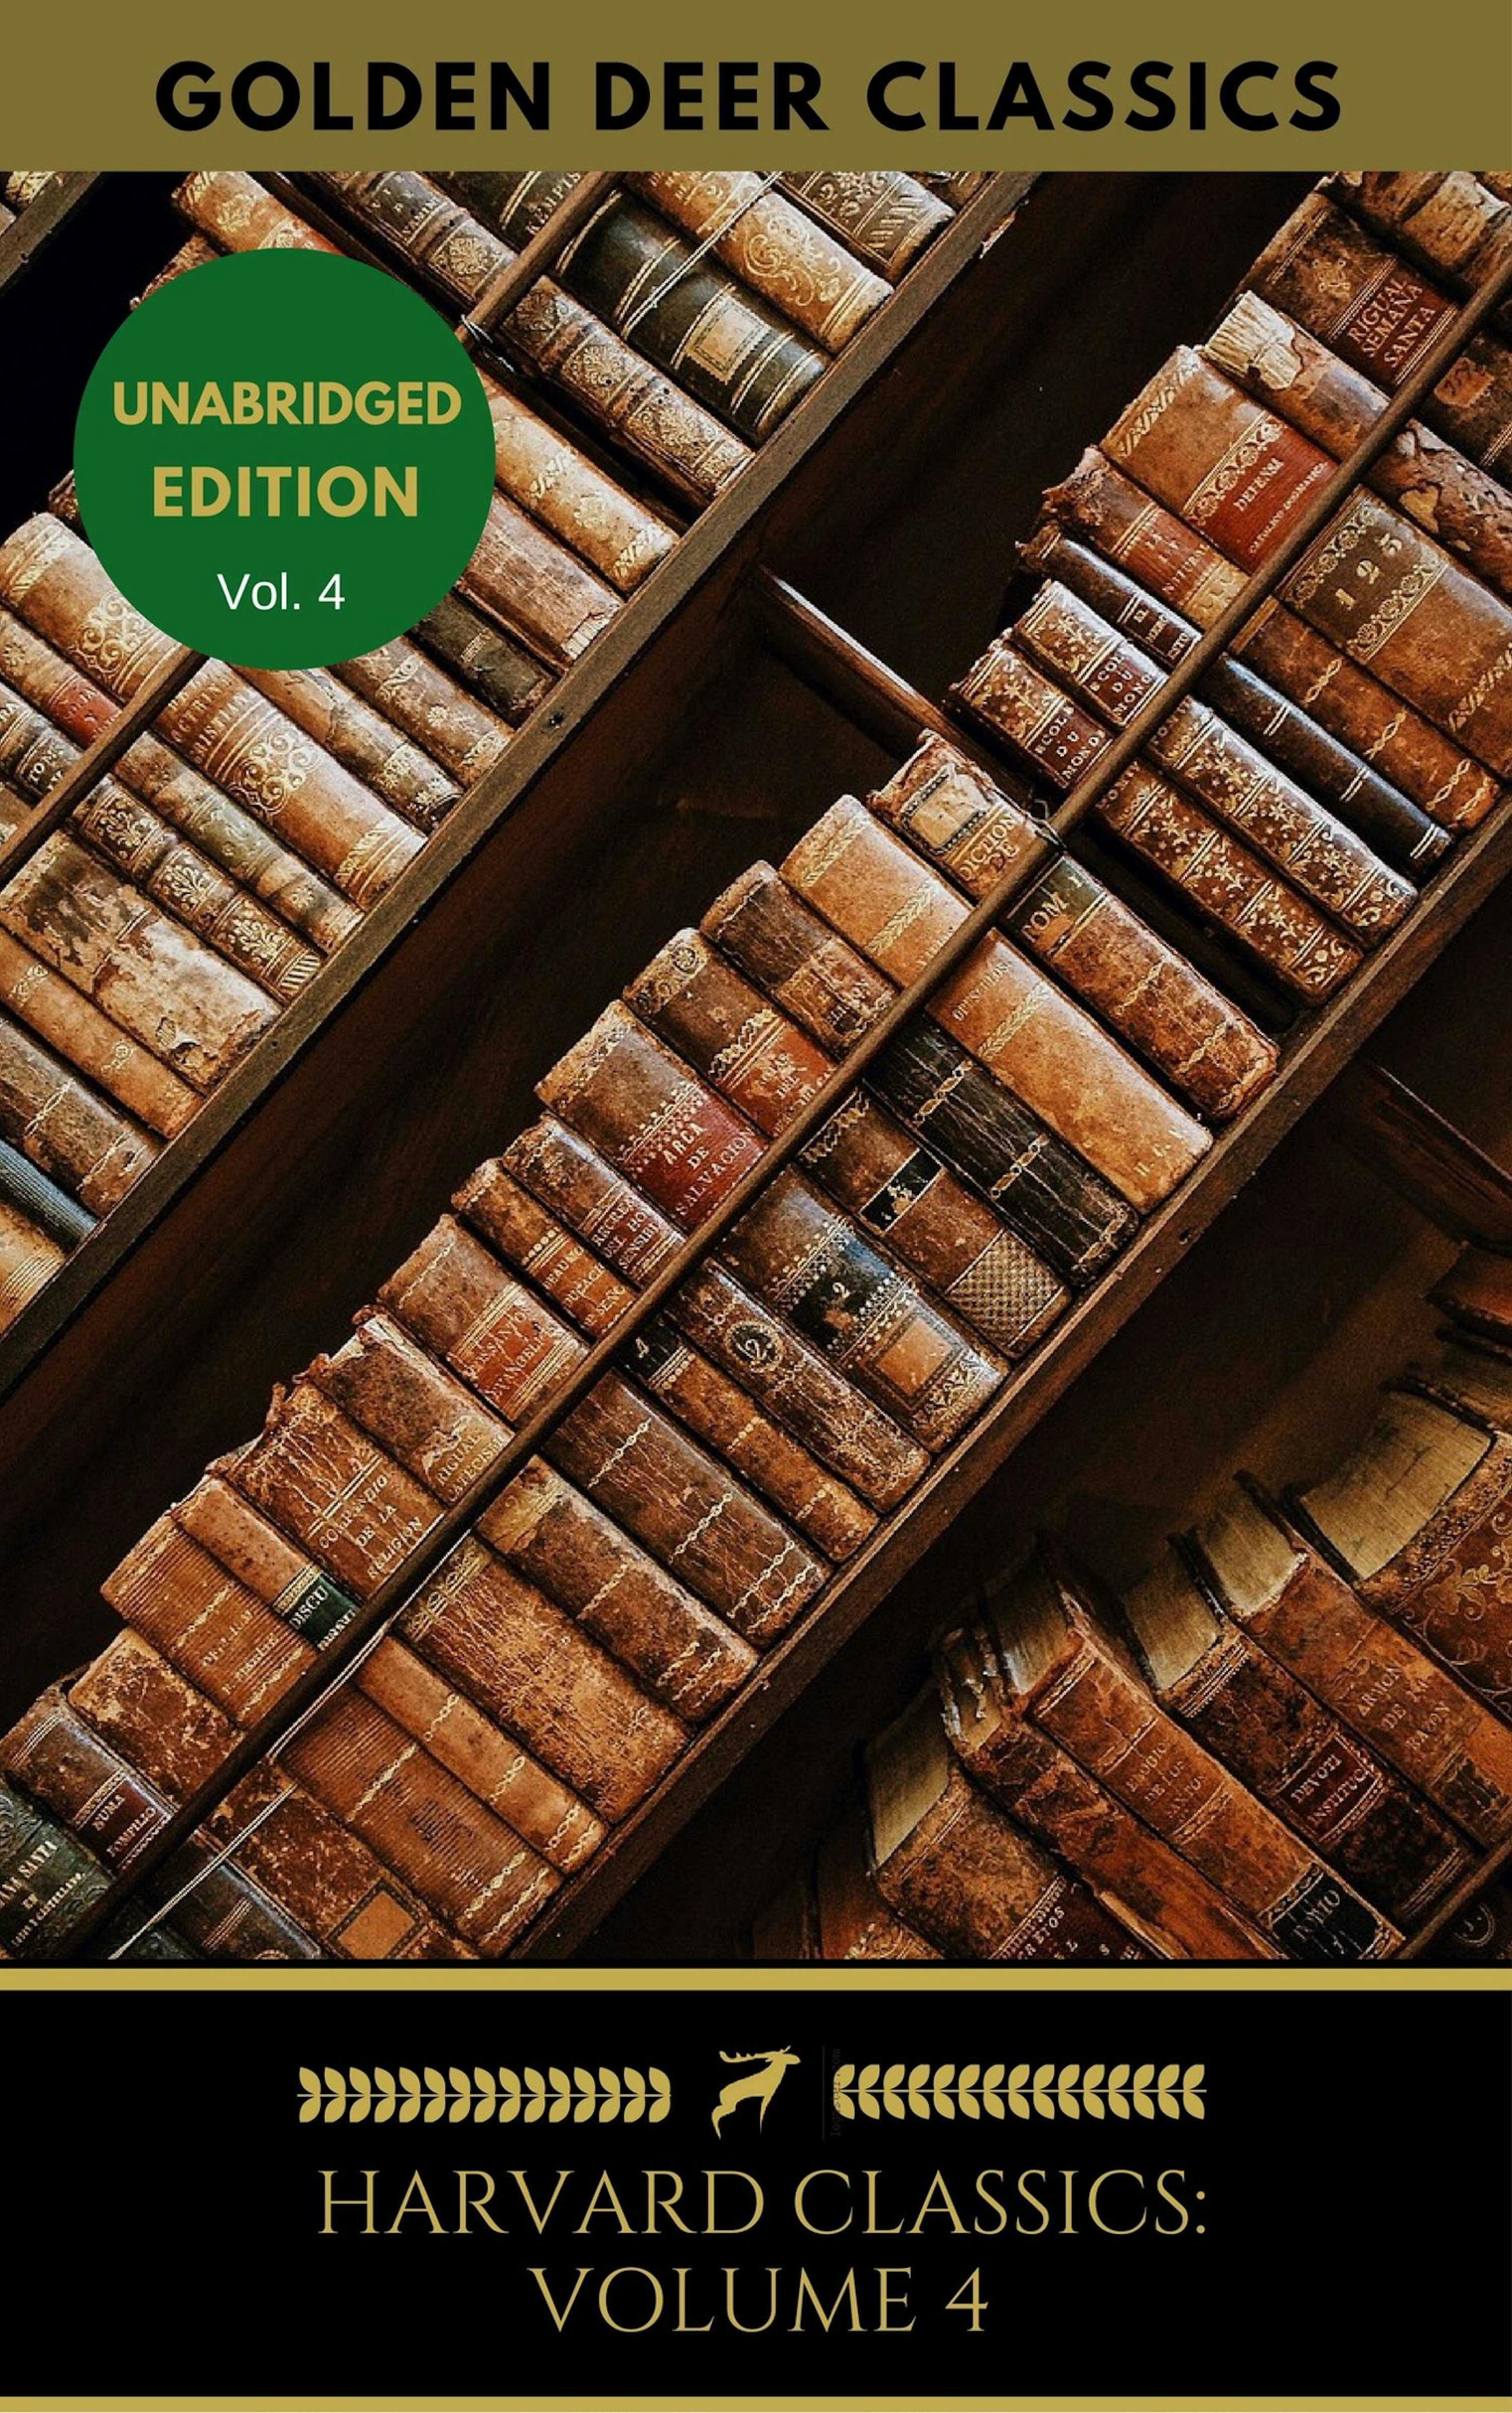 Harvard Classics Volume 4: Complete Poems In English, John Milton - undefined